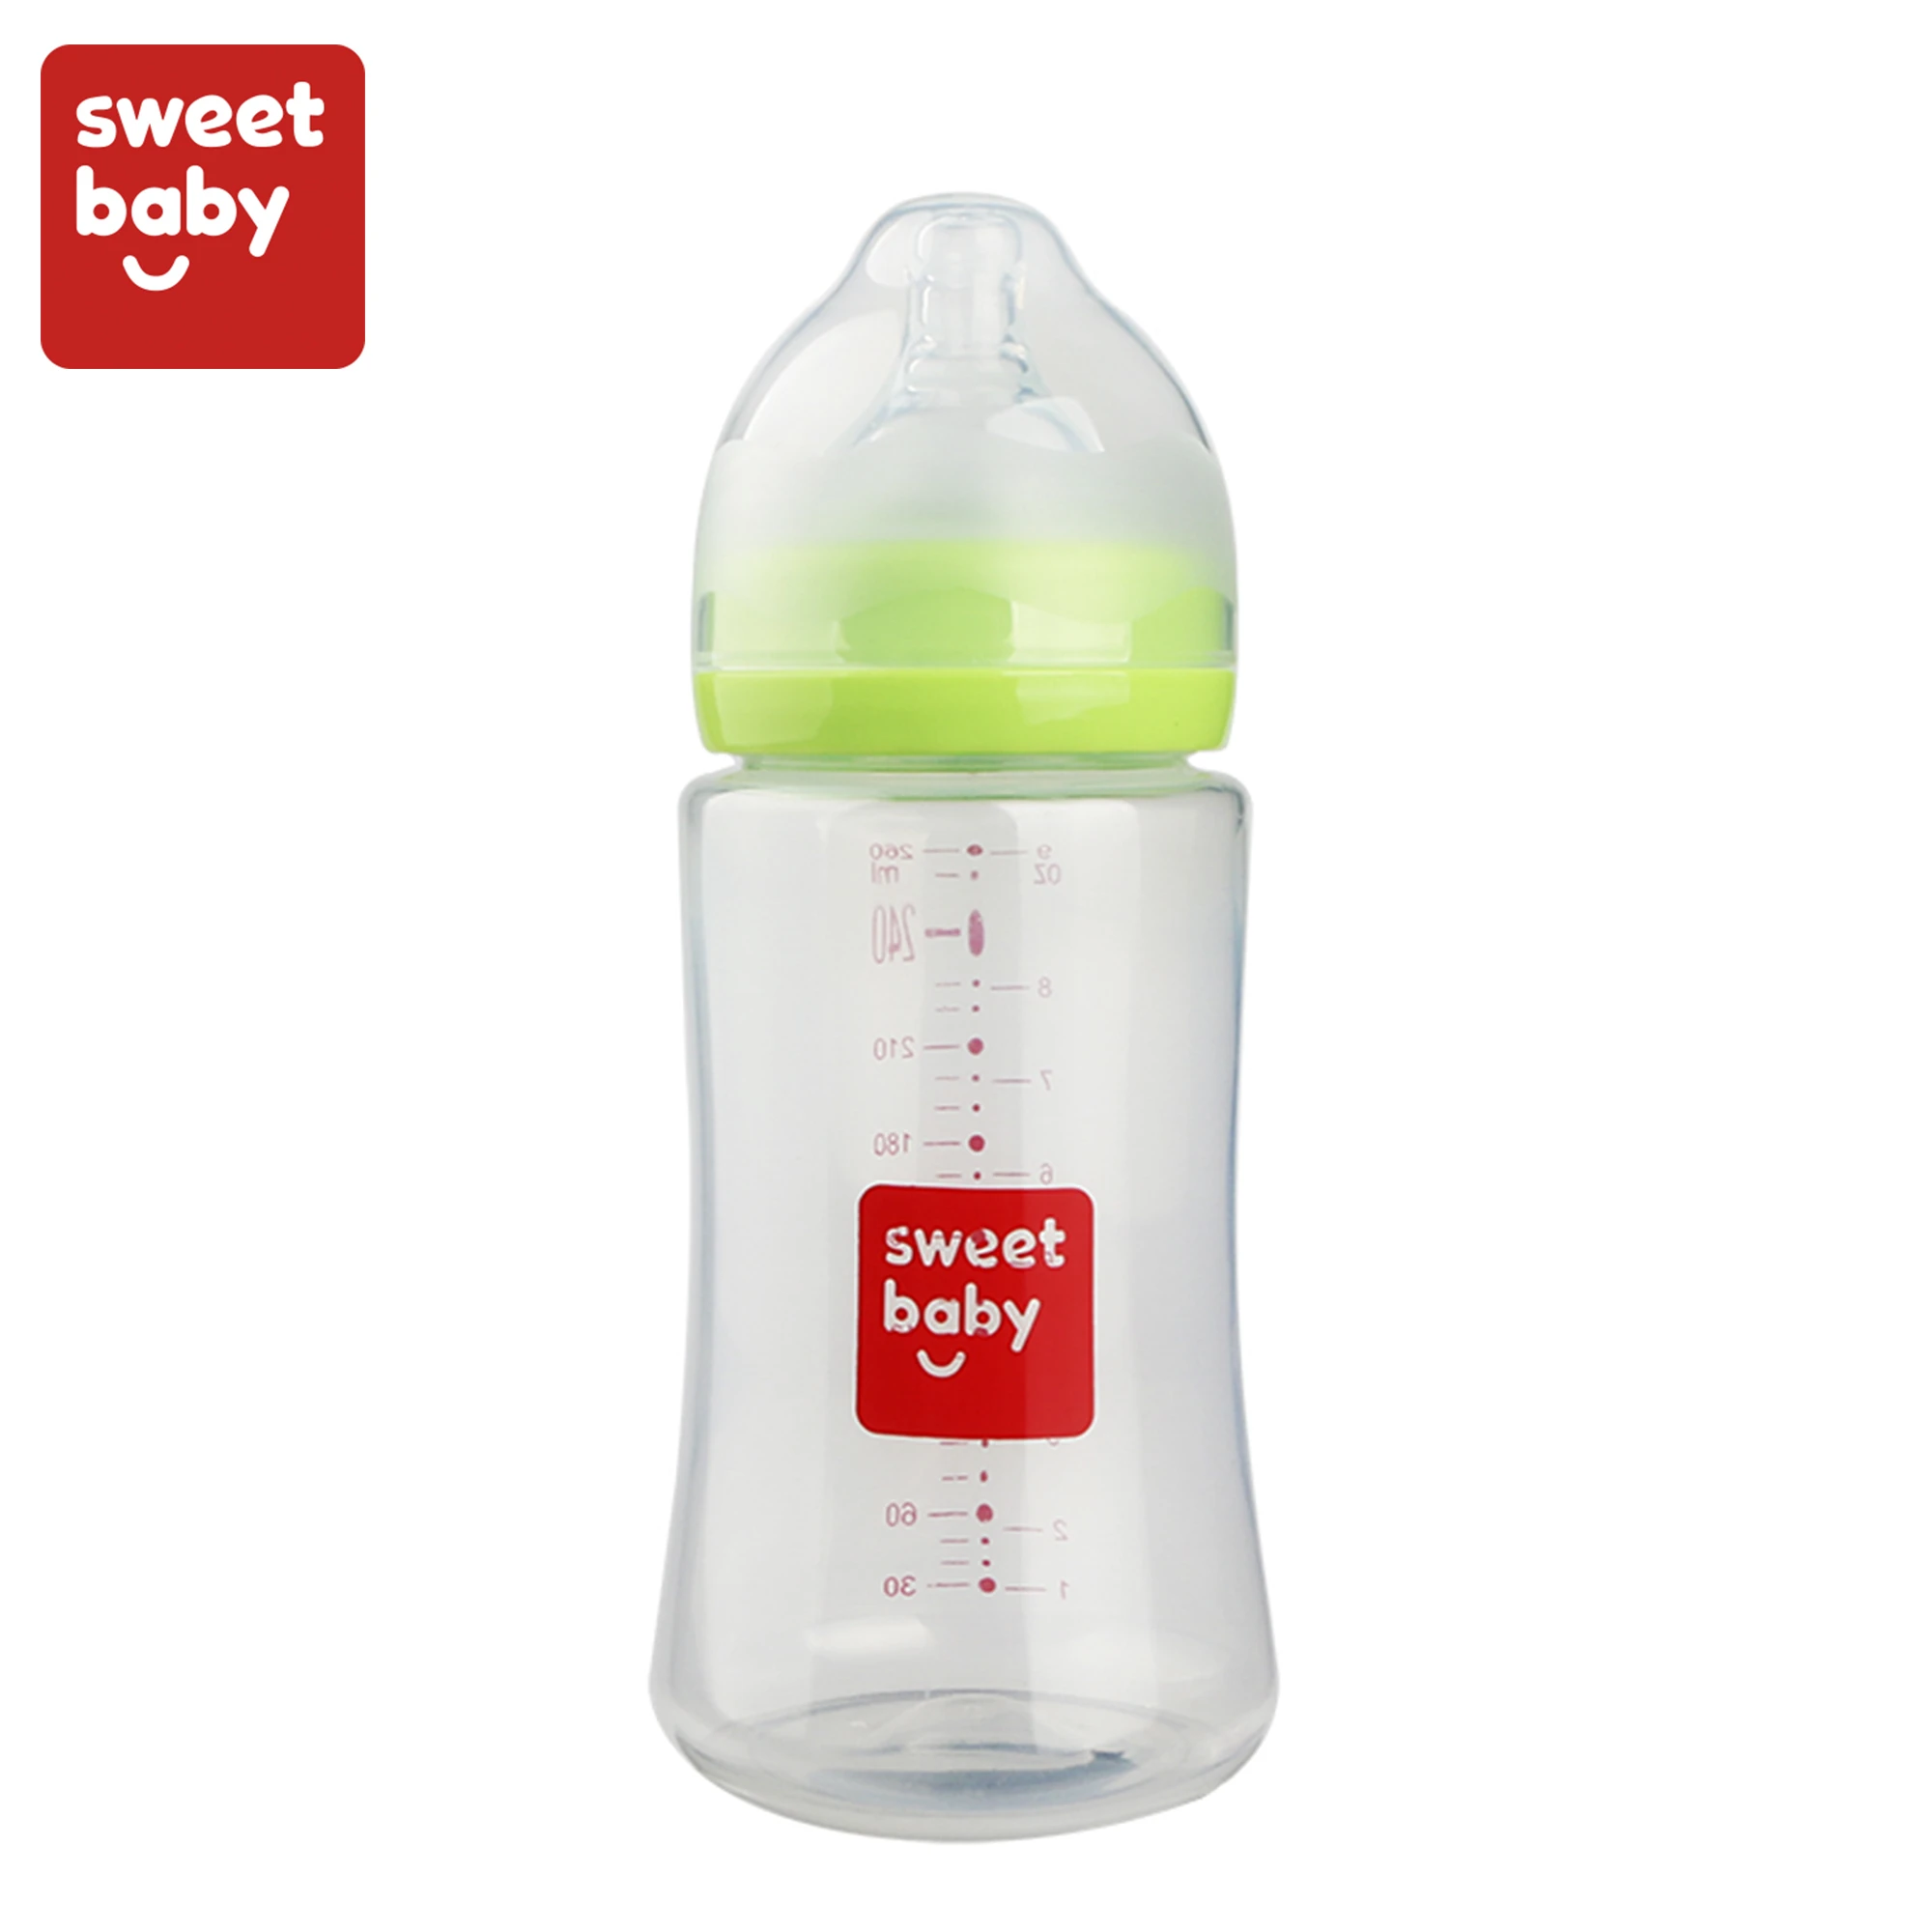 Wholesale Silicone Baby Bottles In Bulk New Born Baby Products Baby Drinking Feeding Milk Bottles Set